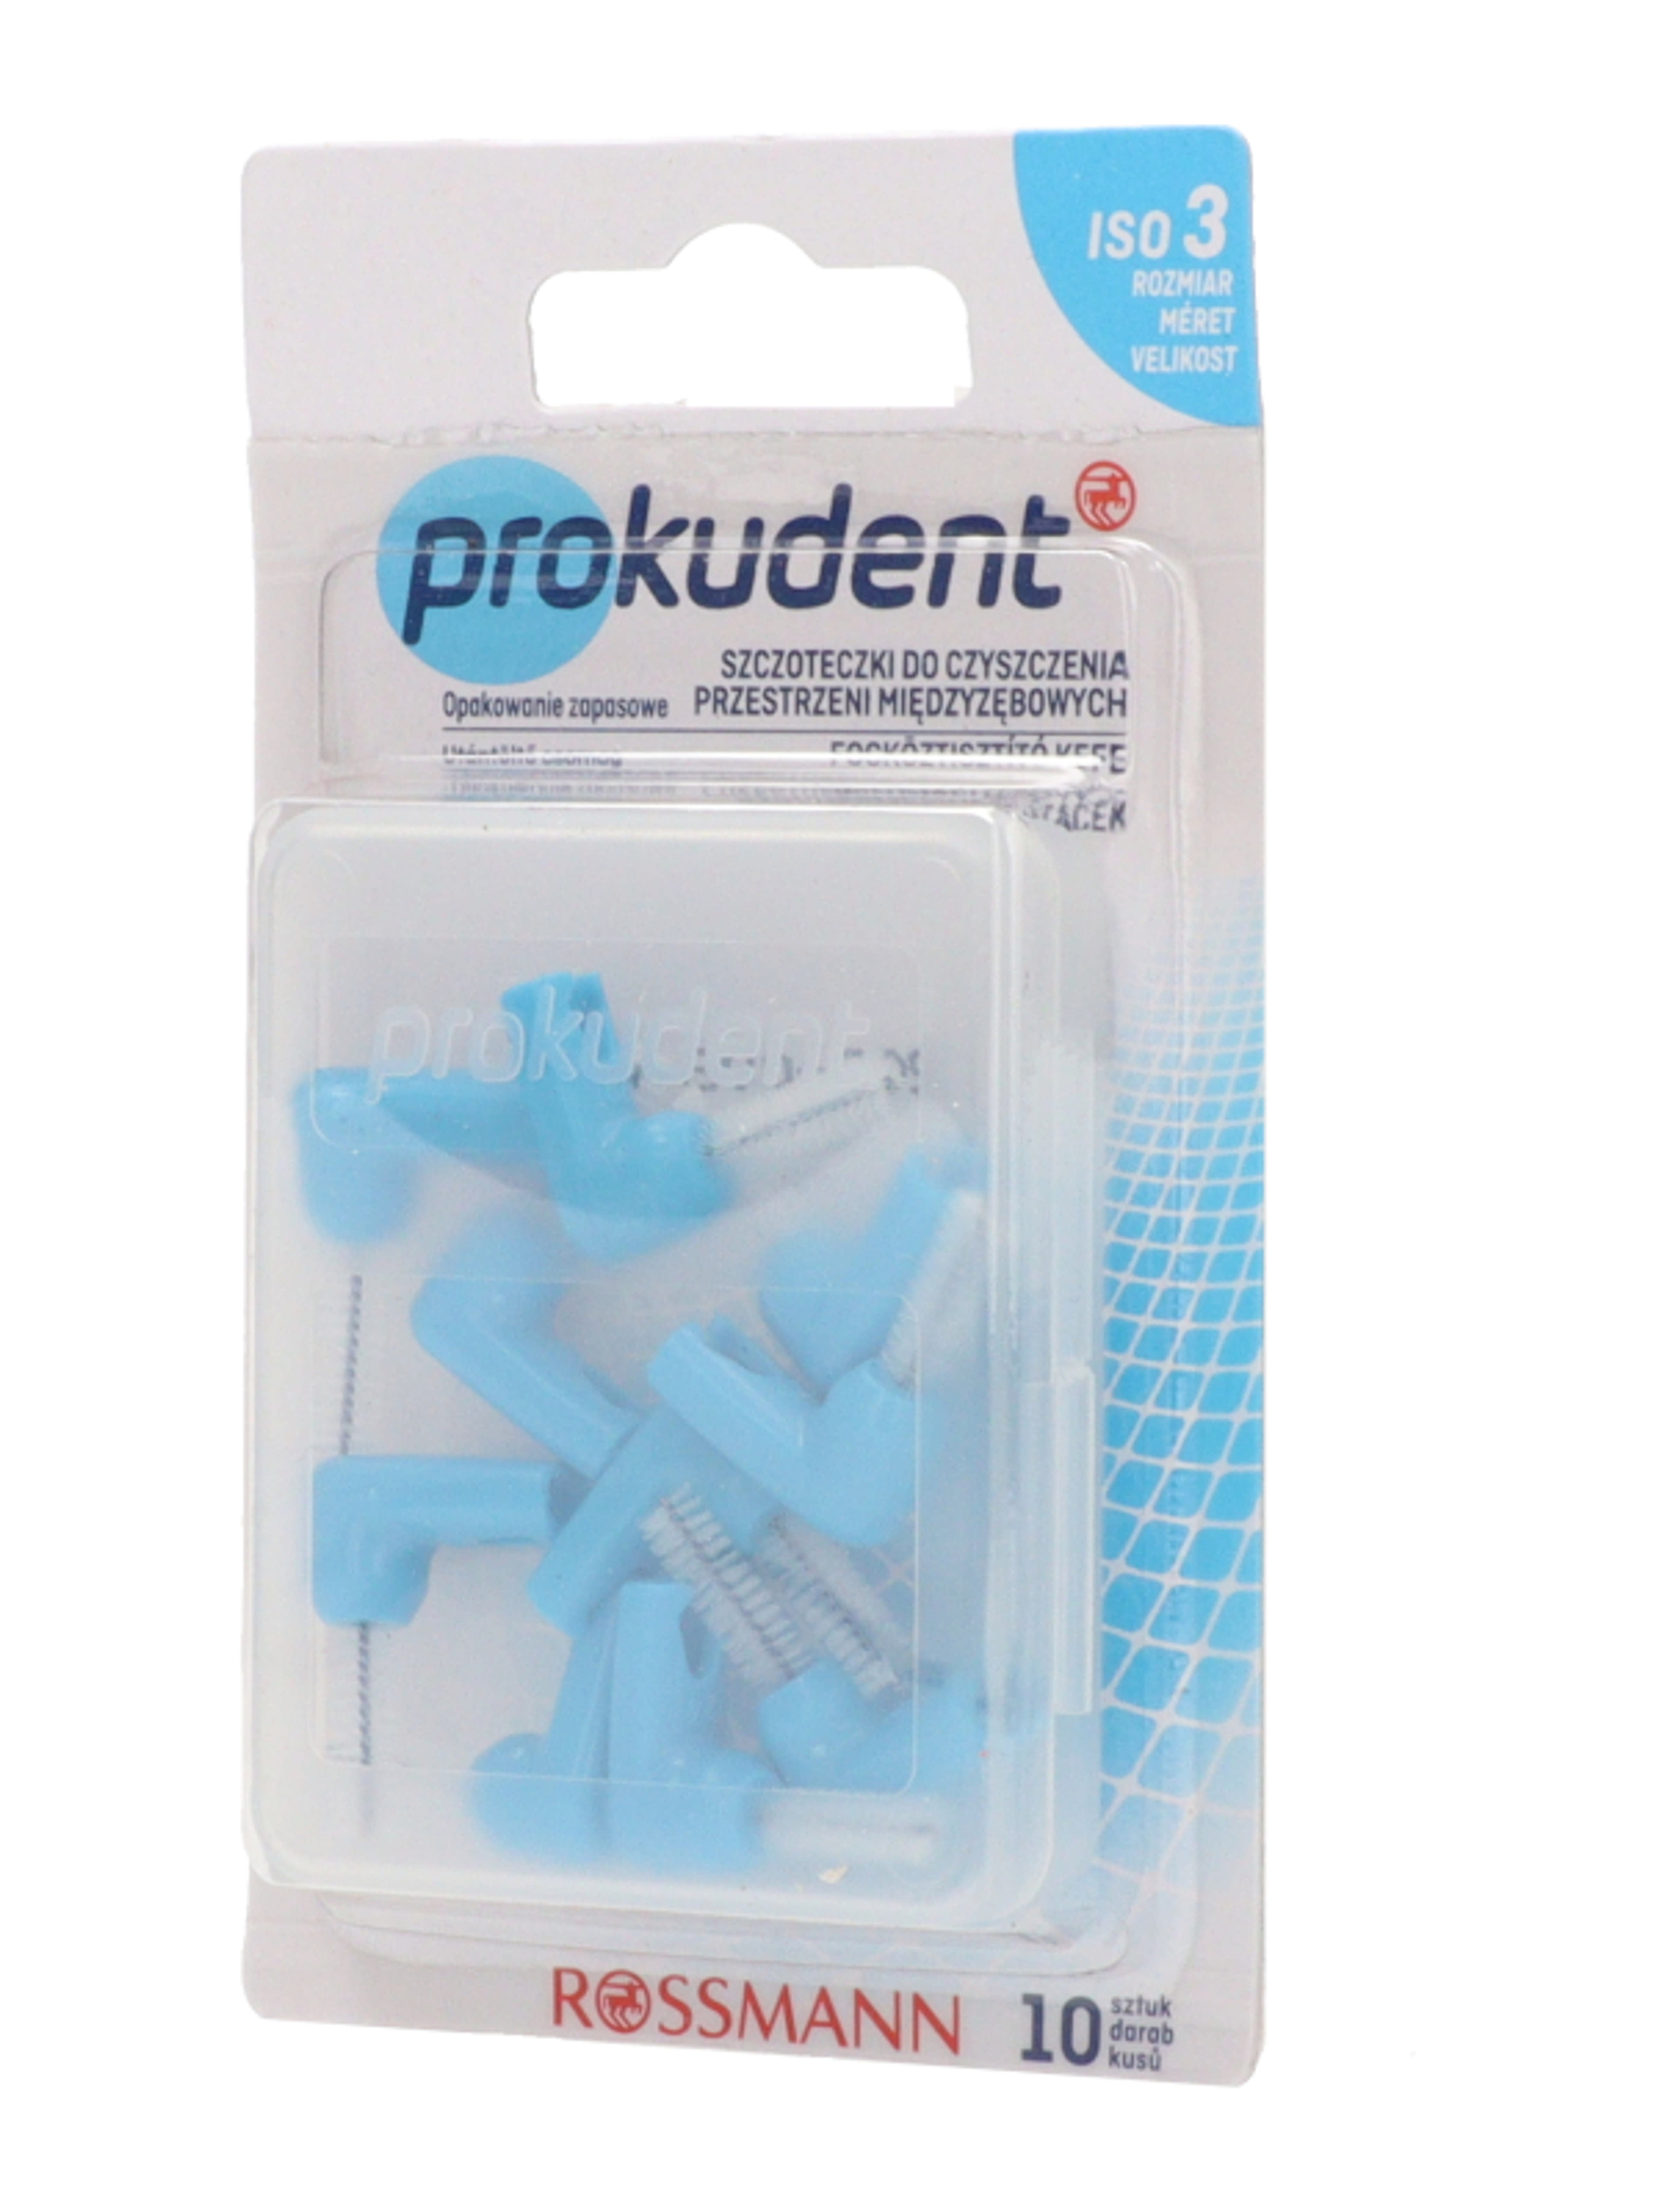 Prokudent Interdental Set Medium pótkefe - 10 db-4